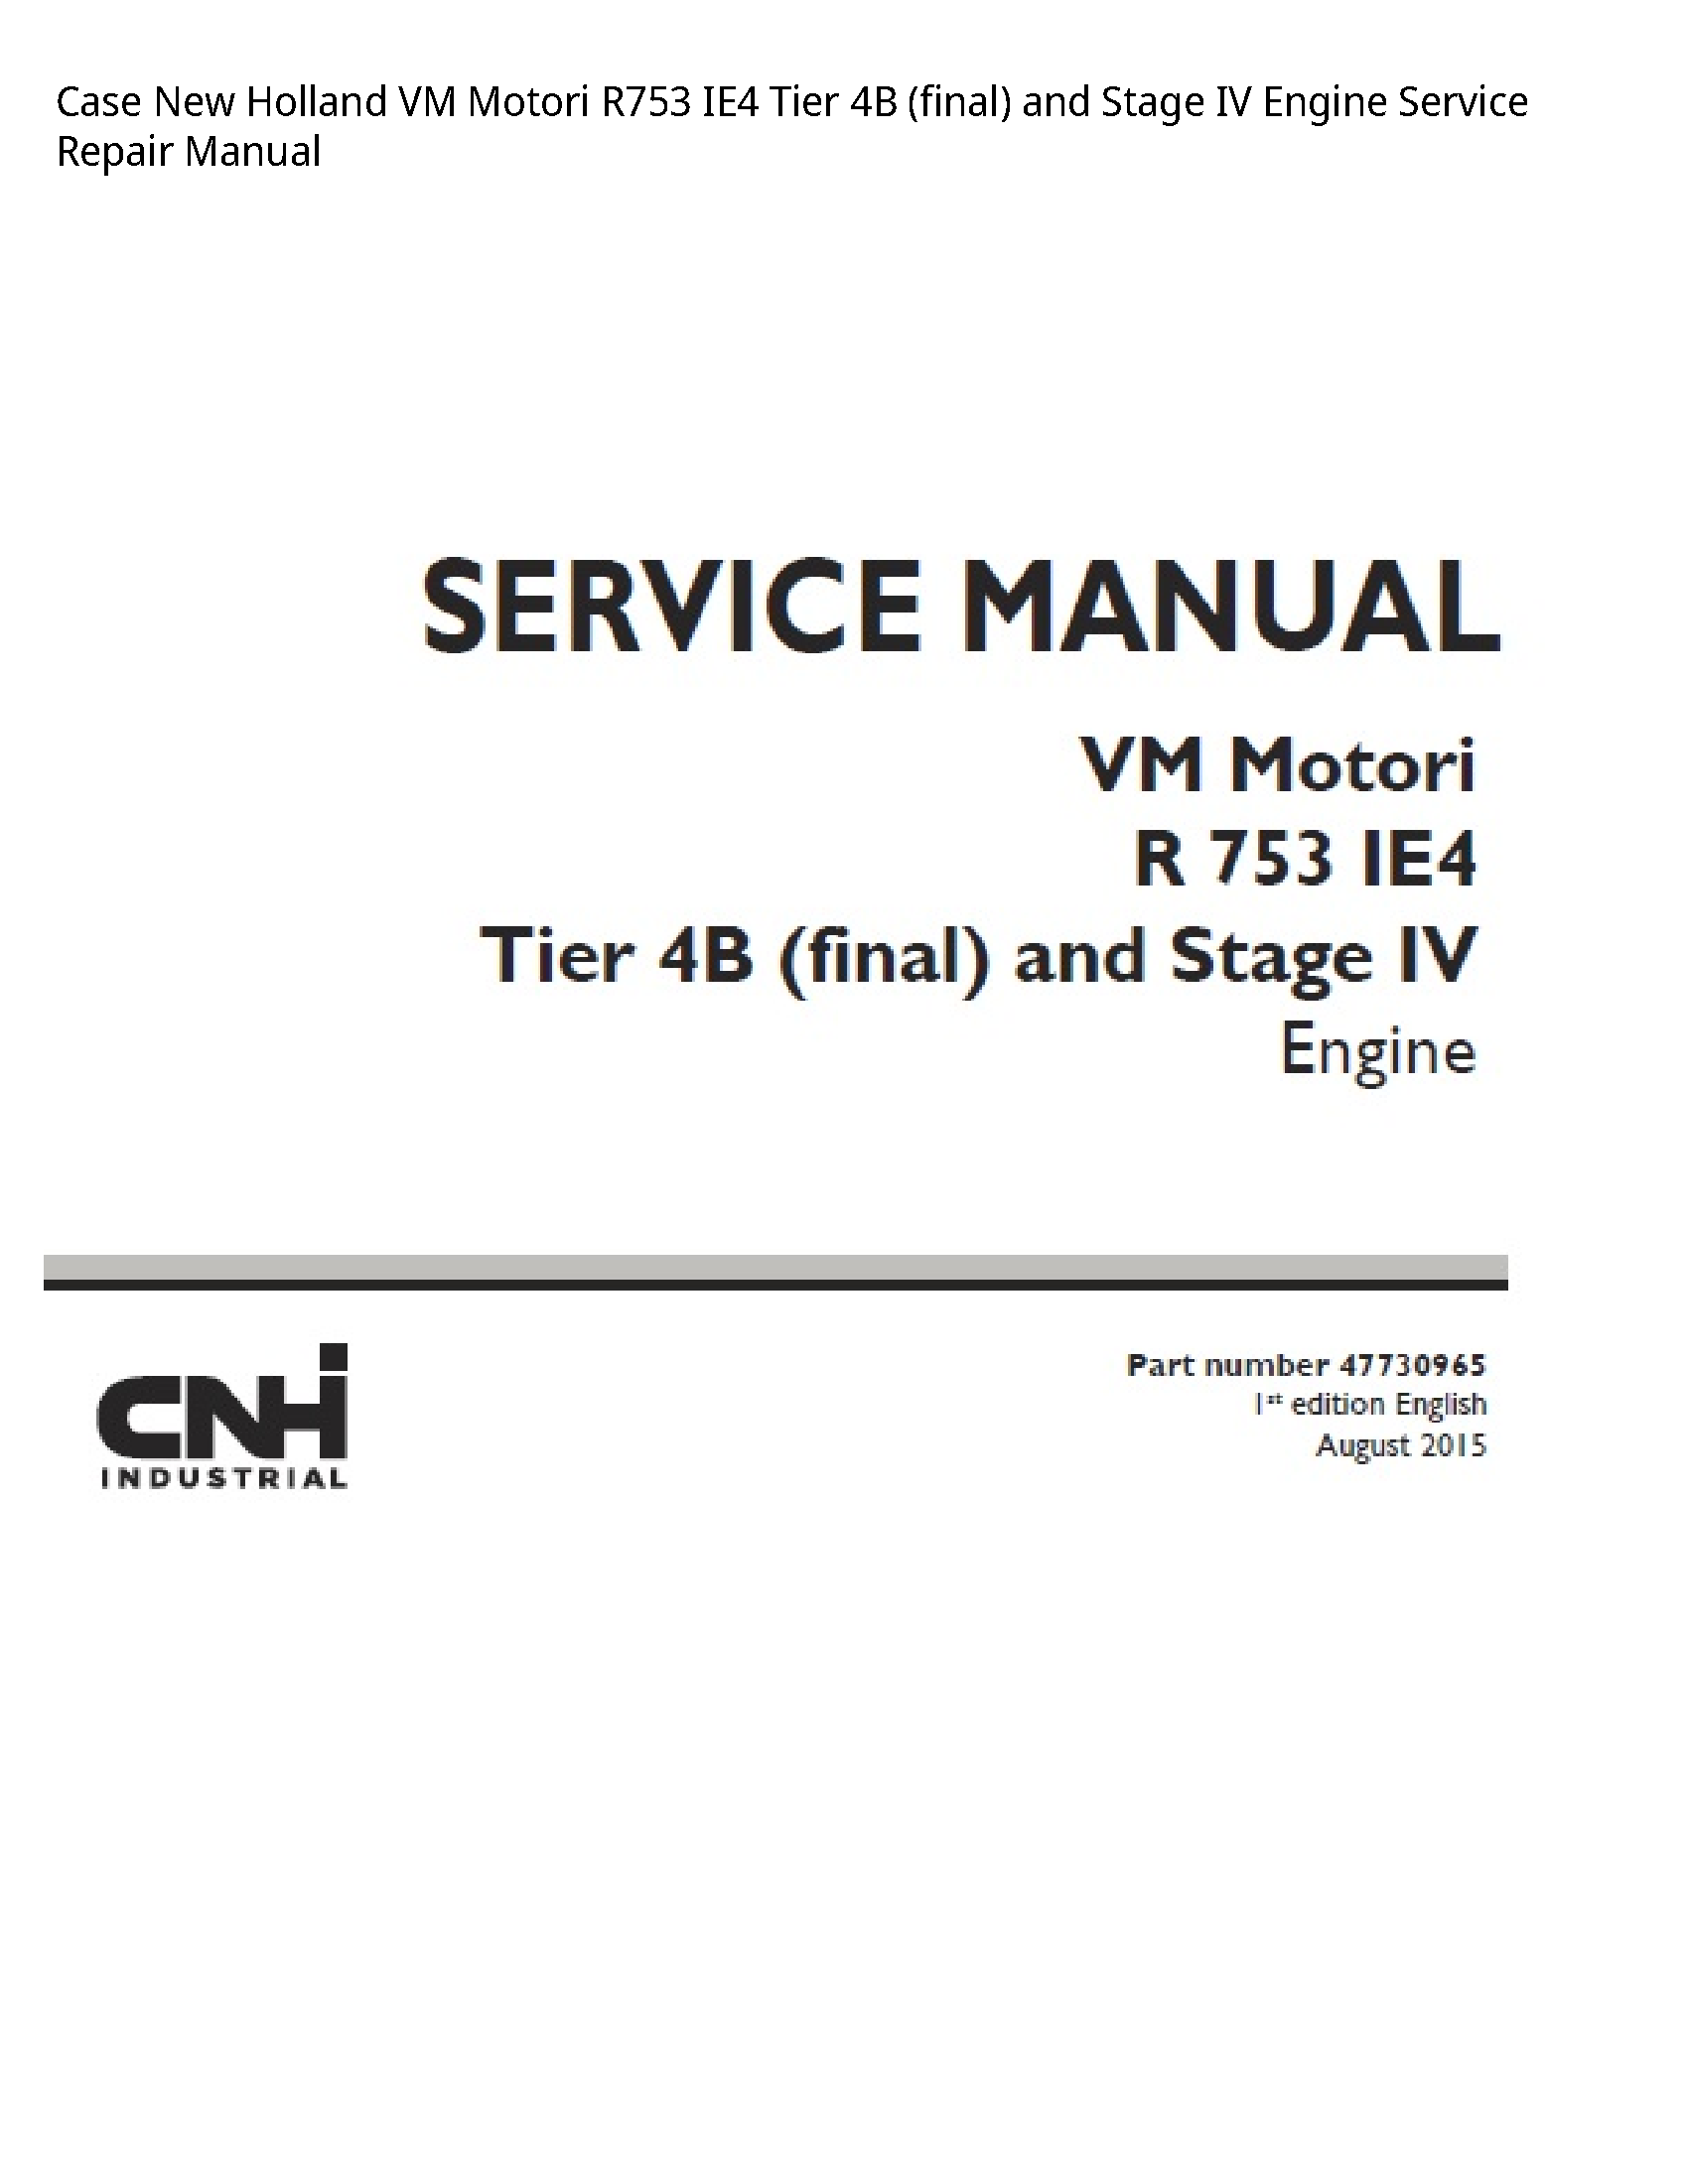 Case/Case IH R753 New Holland VM Motori Tier (final)  Stage IV Engine manual